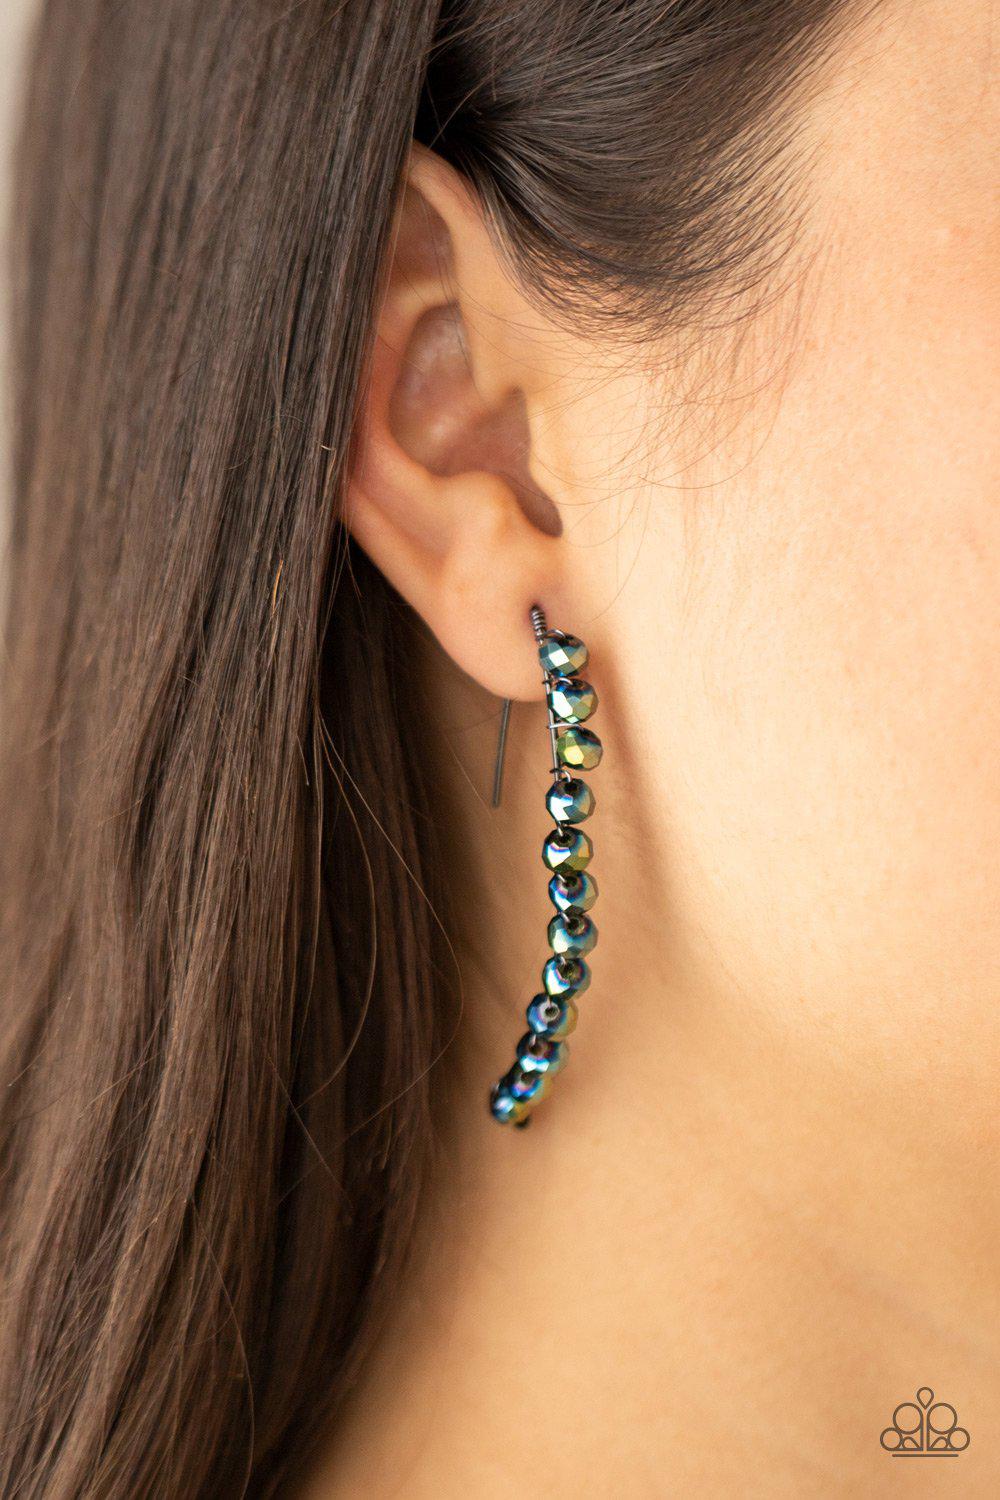 GLOW Hanging Fruit Multi Iridescent Blue Rhinestone Post Earrings - Paparazzi Accessories- model - CarasShop.com - $5 Jewelry by Cara Jewels